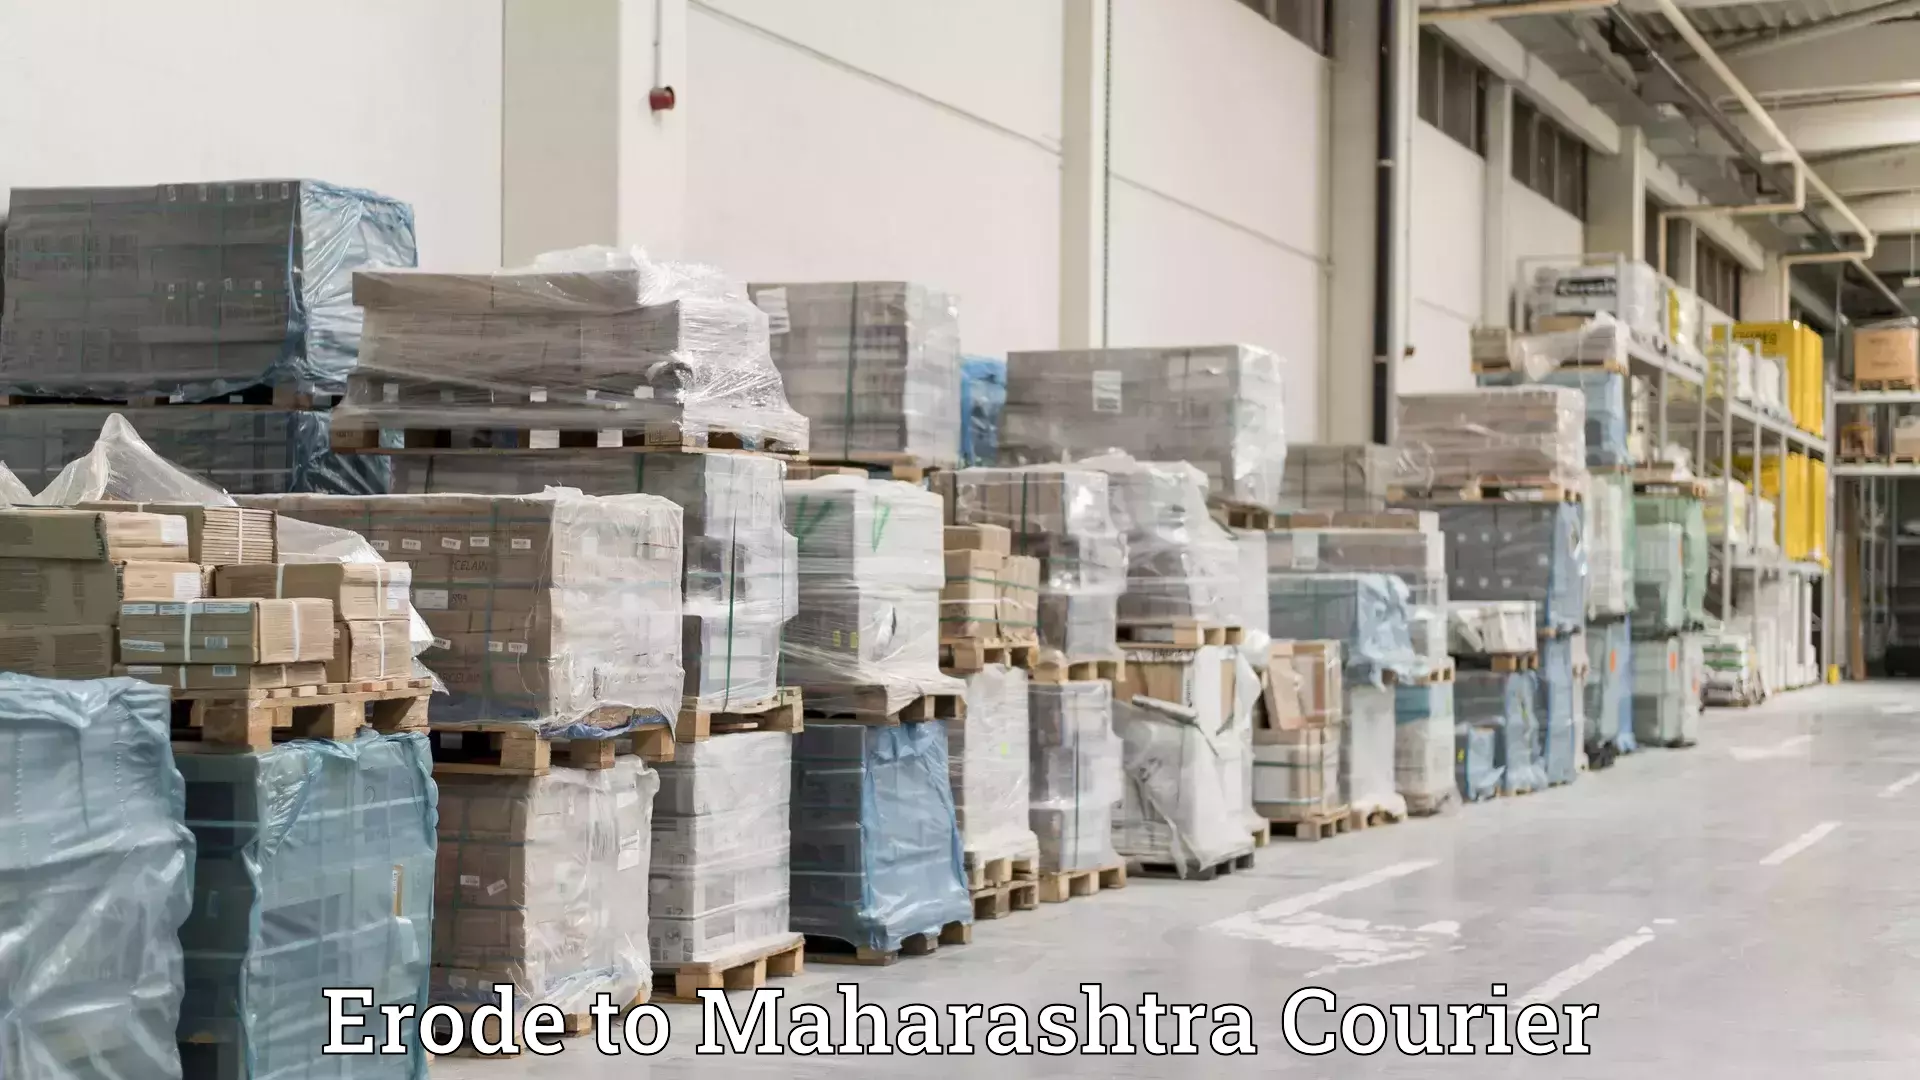 Professional moving company Erode to Maharashtra